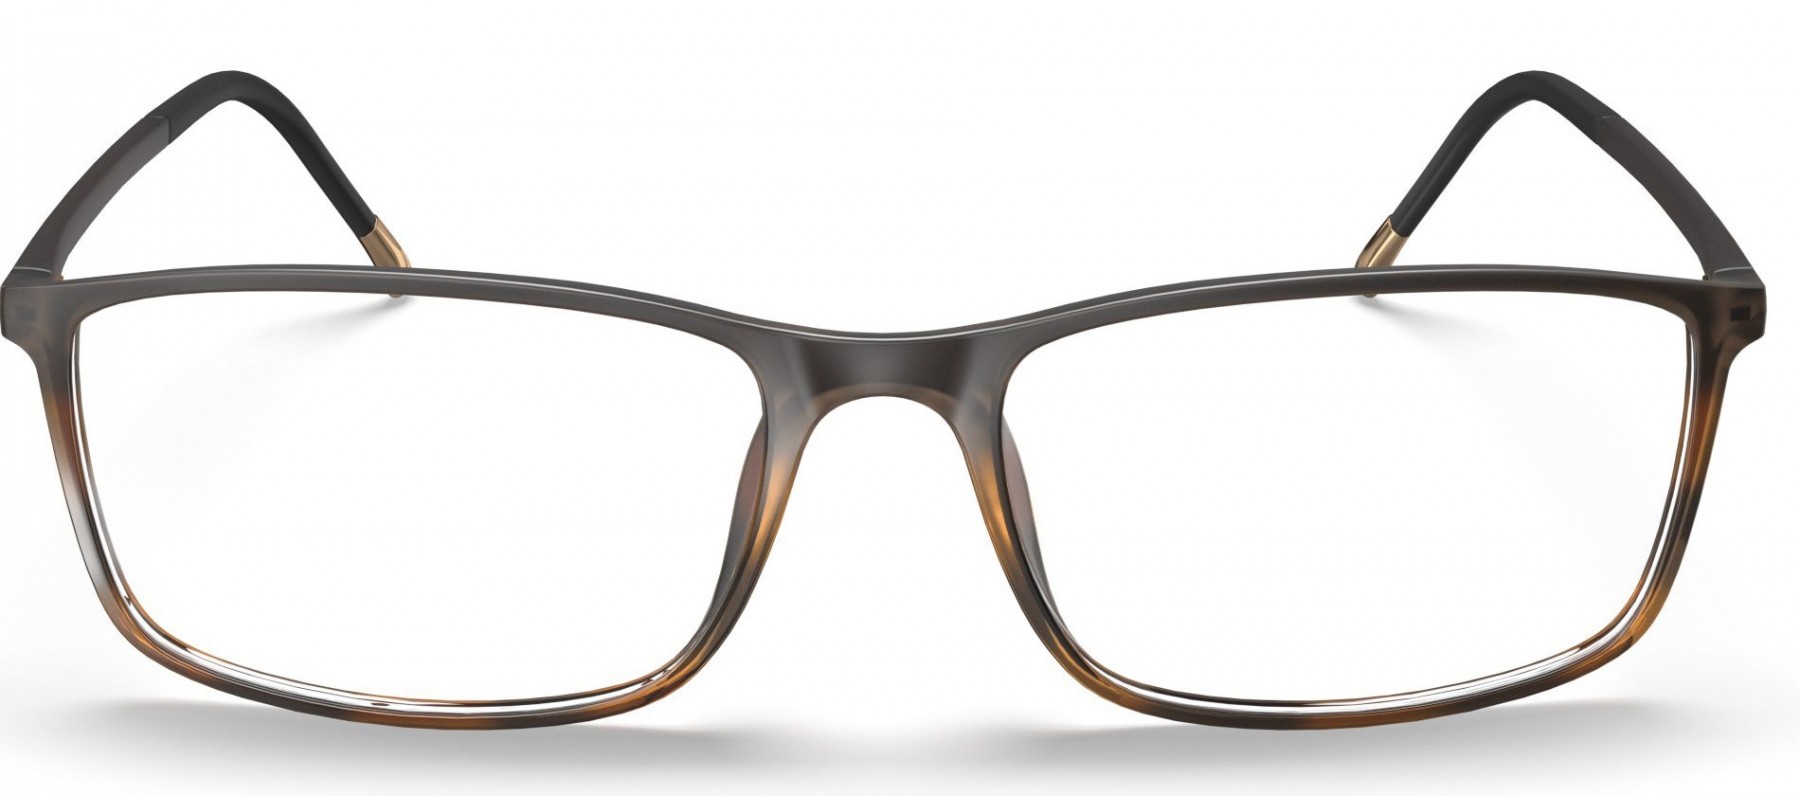 Silhouette 2934 M130 Tam 54 SPX Illusion - Oculos de Grau